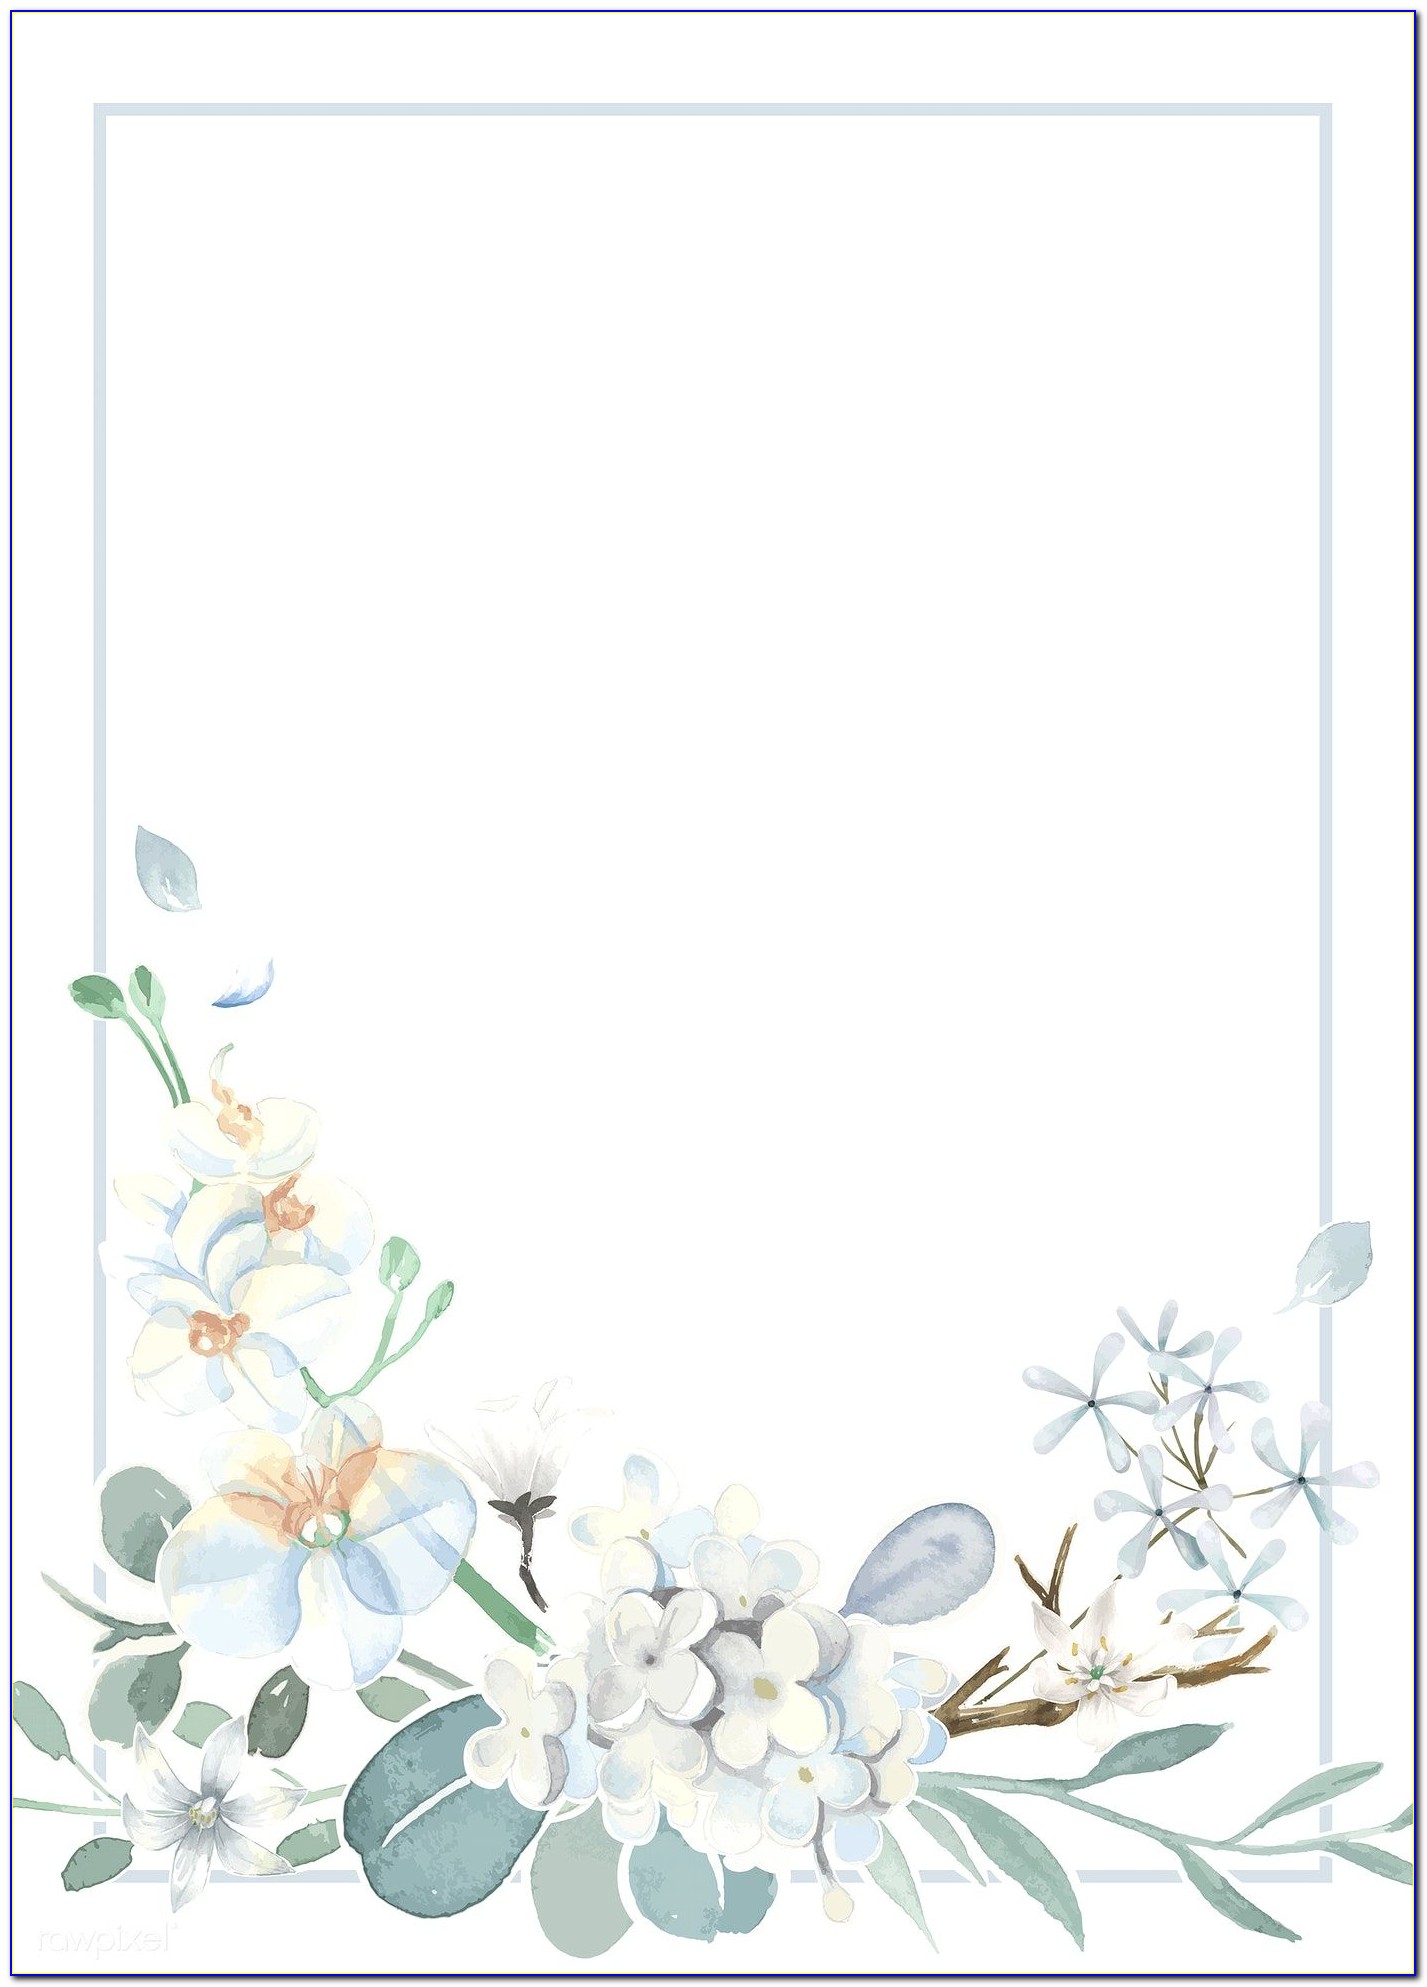 Floral Invitation Background Images